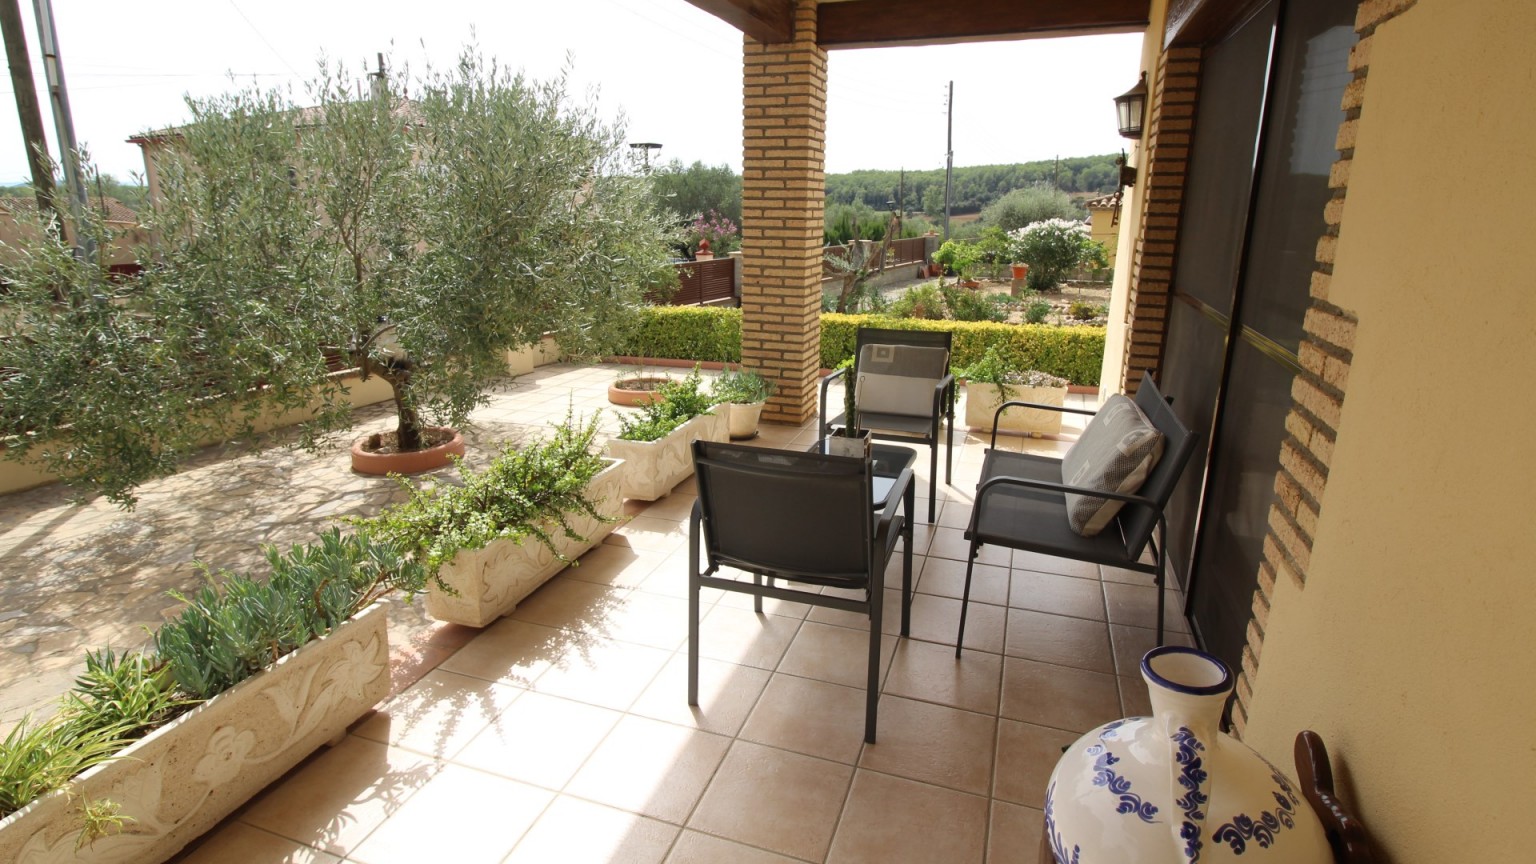 Charming villa for sale, ground floor with large garden, in Sant Miquel de Fluvià.